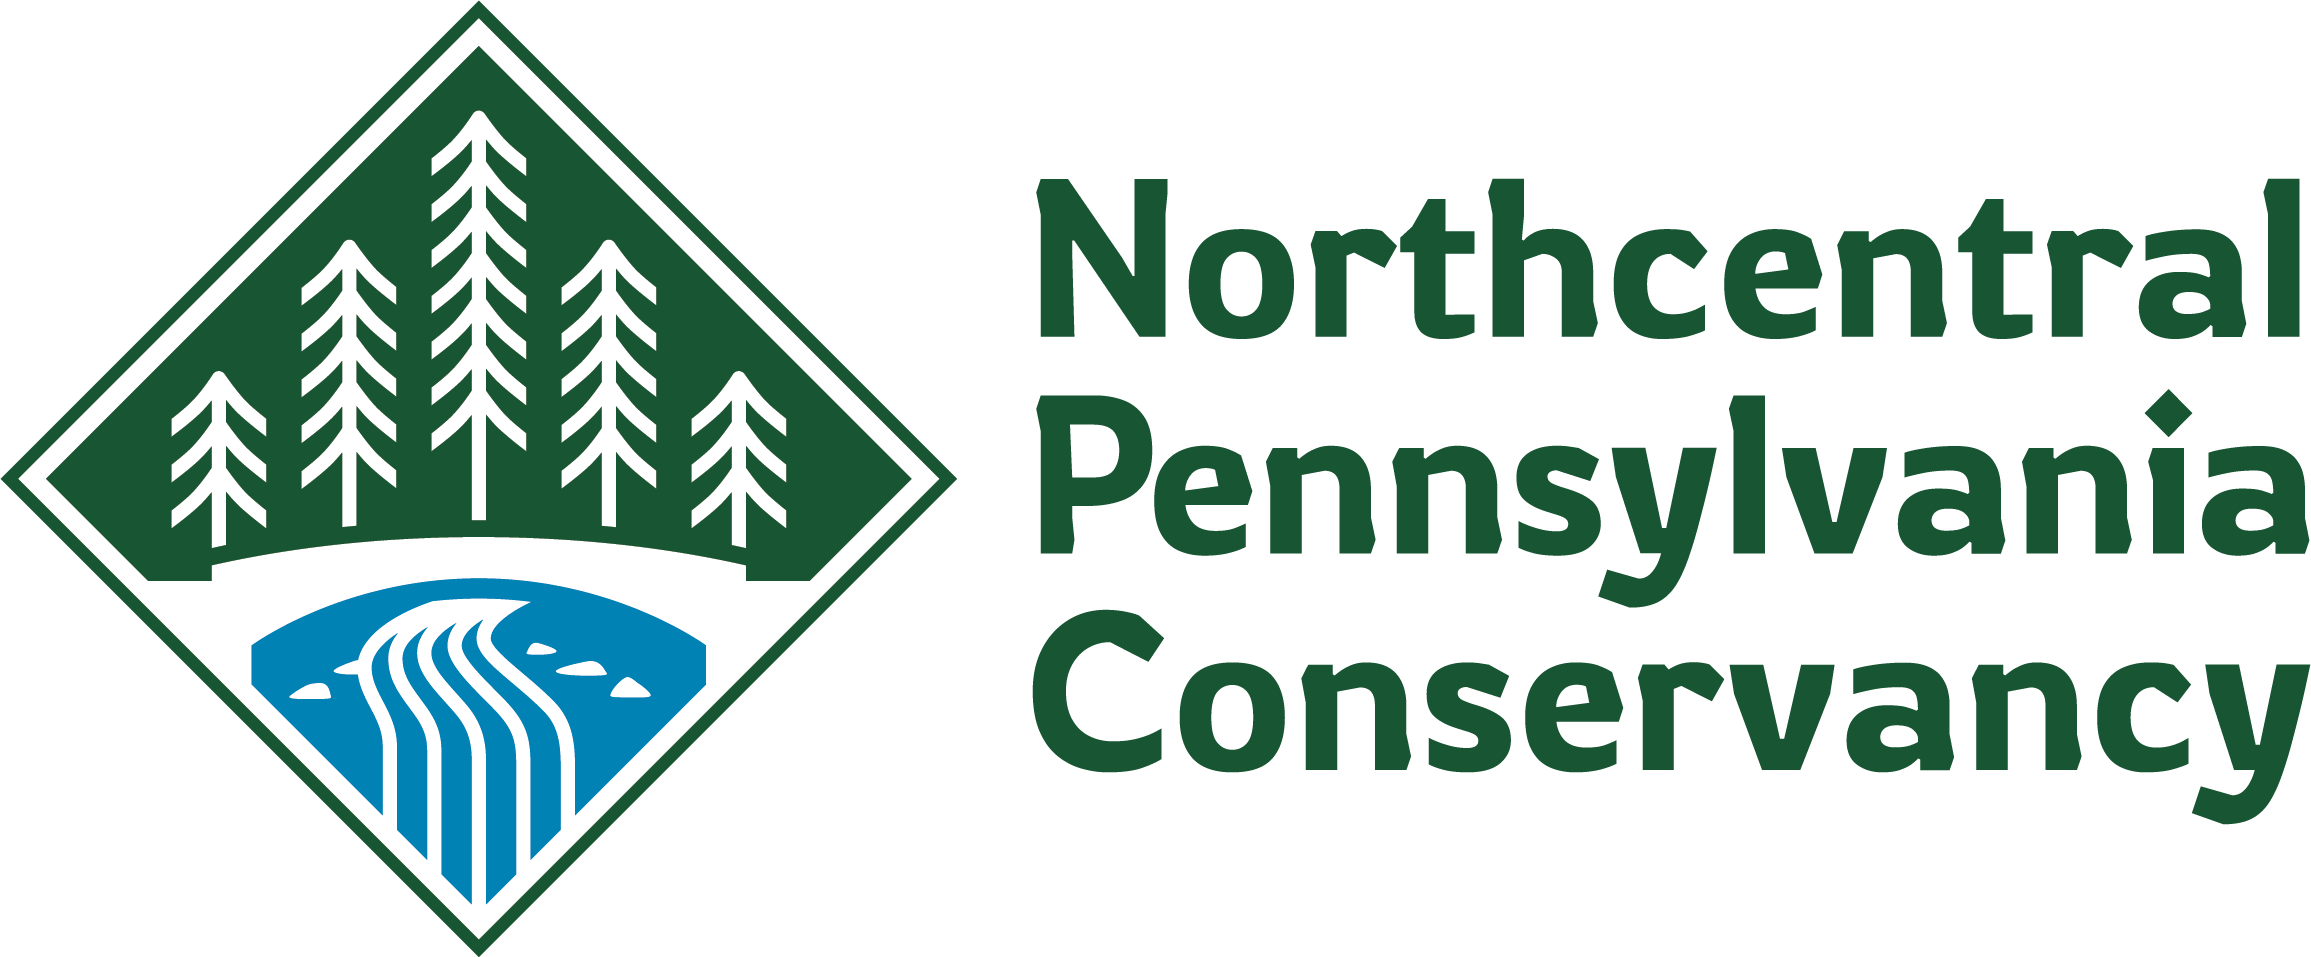 Northcentral Pennsylvania Conservancy logo